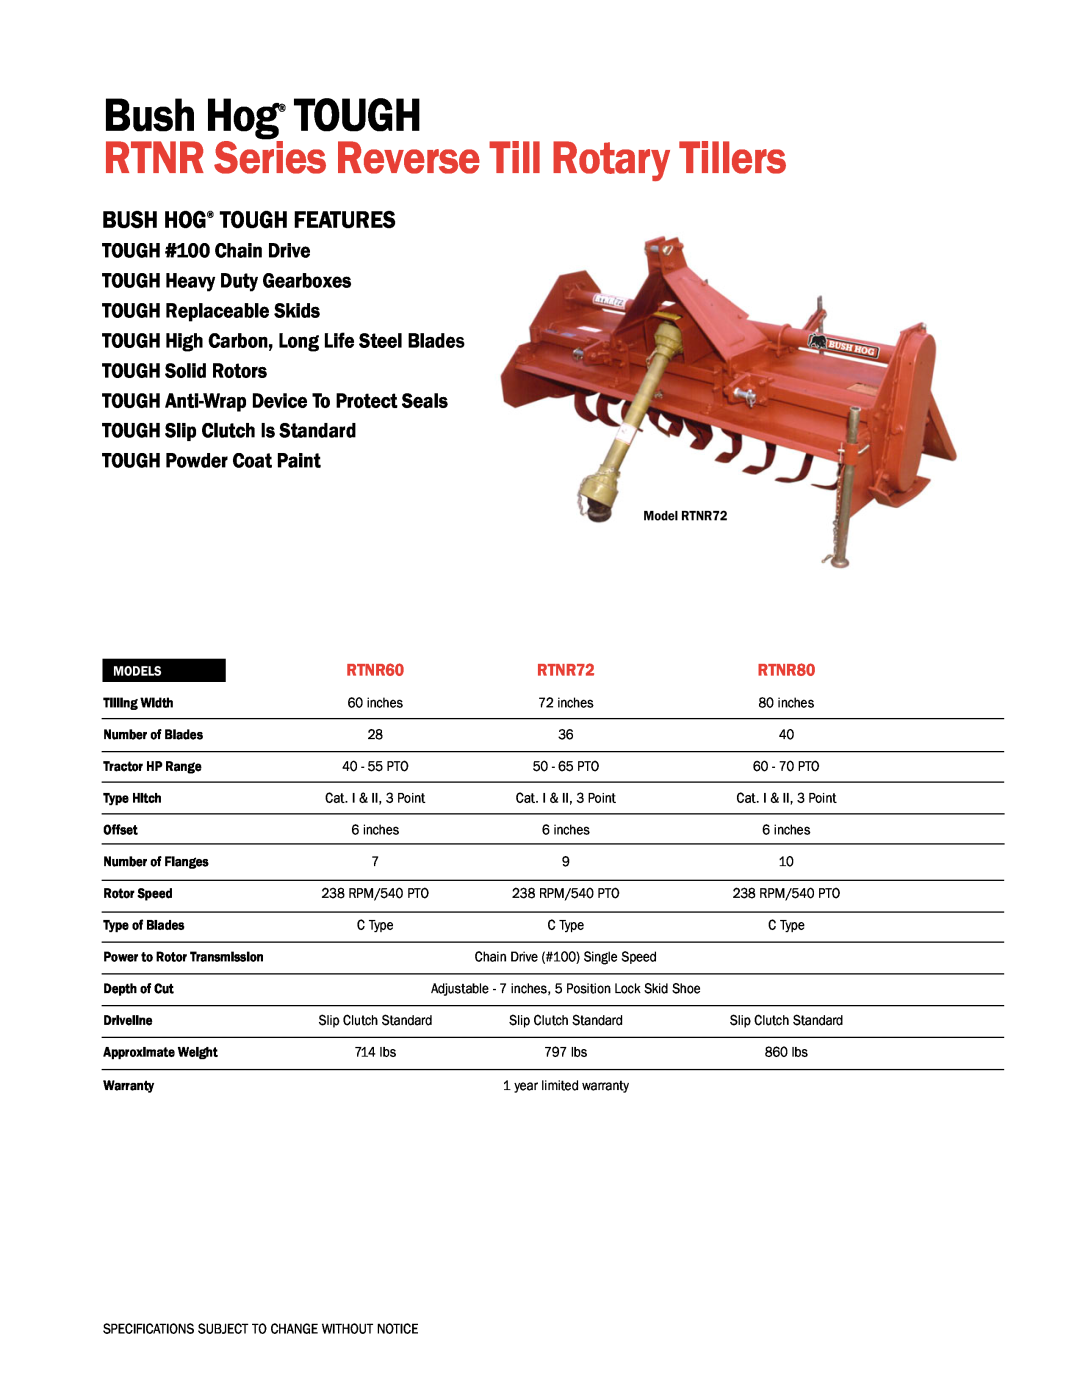 Bush Hog RTNR80 specifications RTNR Series Reverse Till Rotary Tillers, Bush Hog TOUGH Features, TOUGH Solid Rotors 